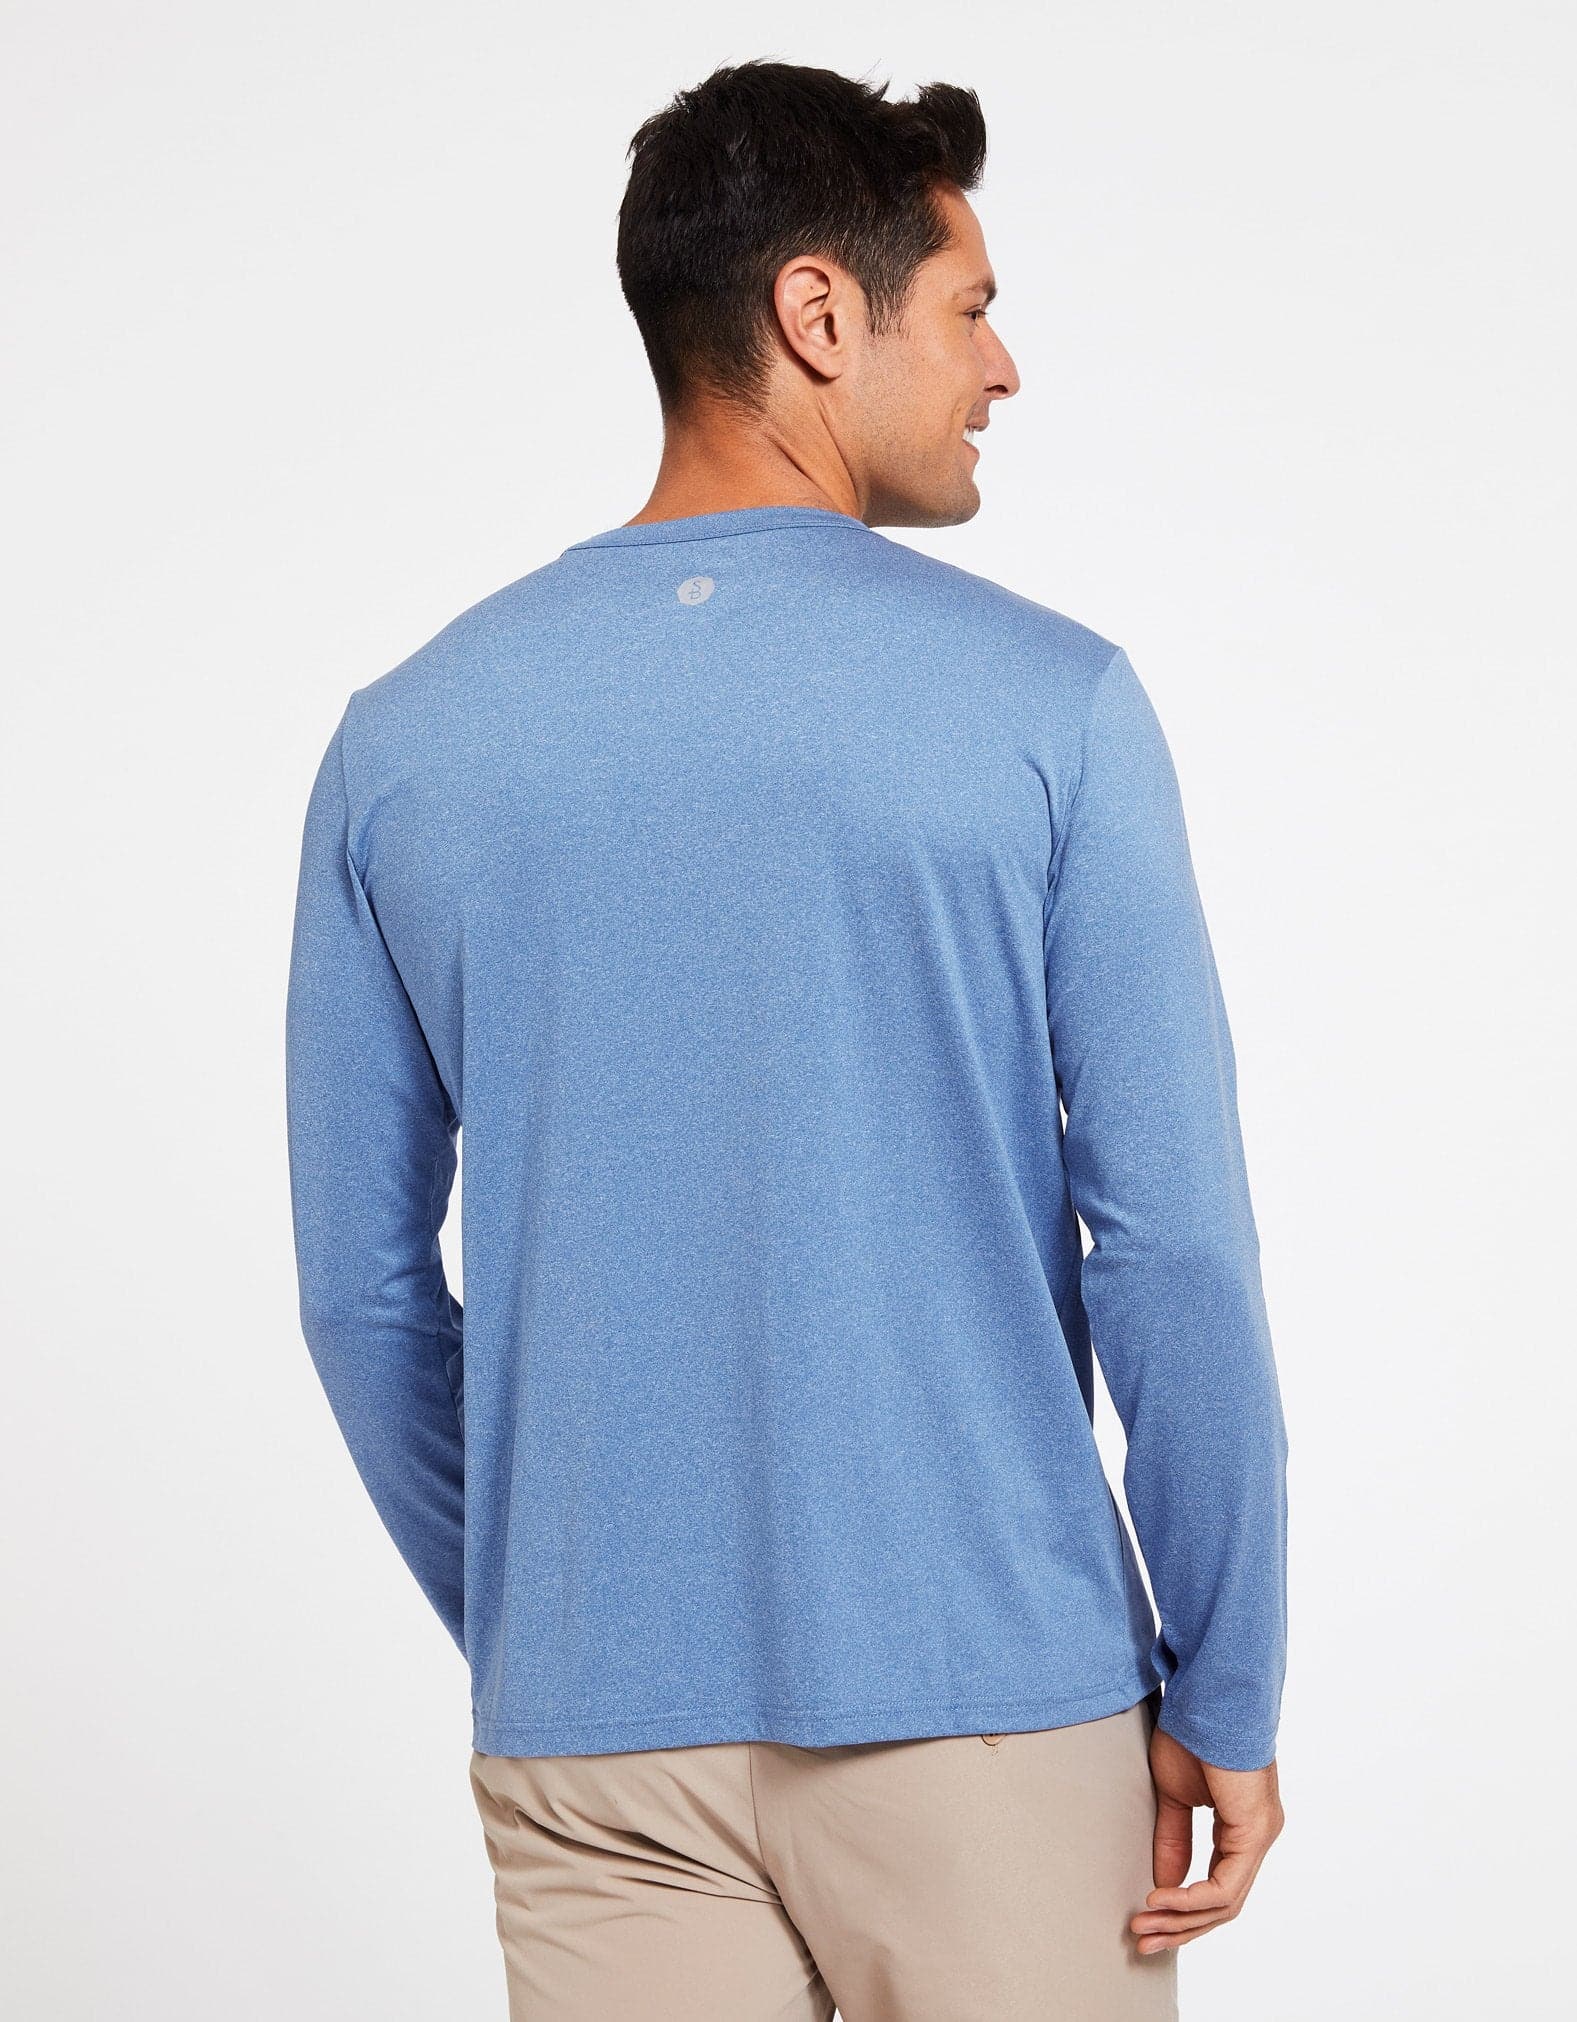 Mens Moisture-Wicking Cotton/Poly T-shirt, Small Aqua Blue